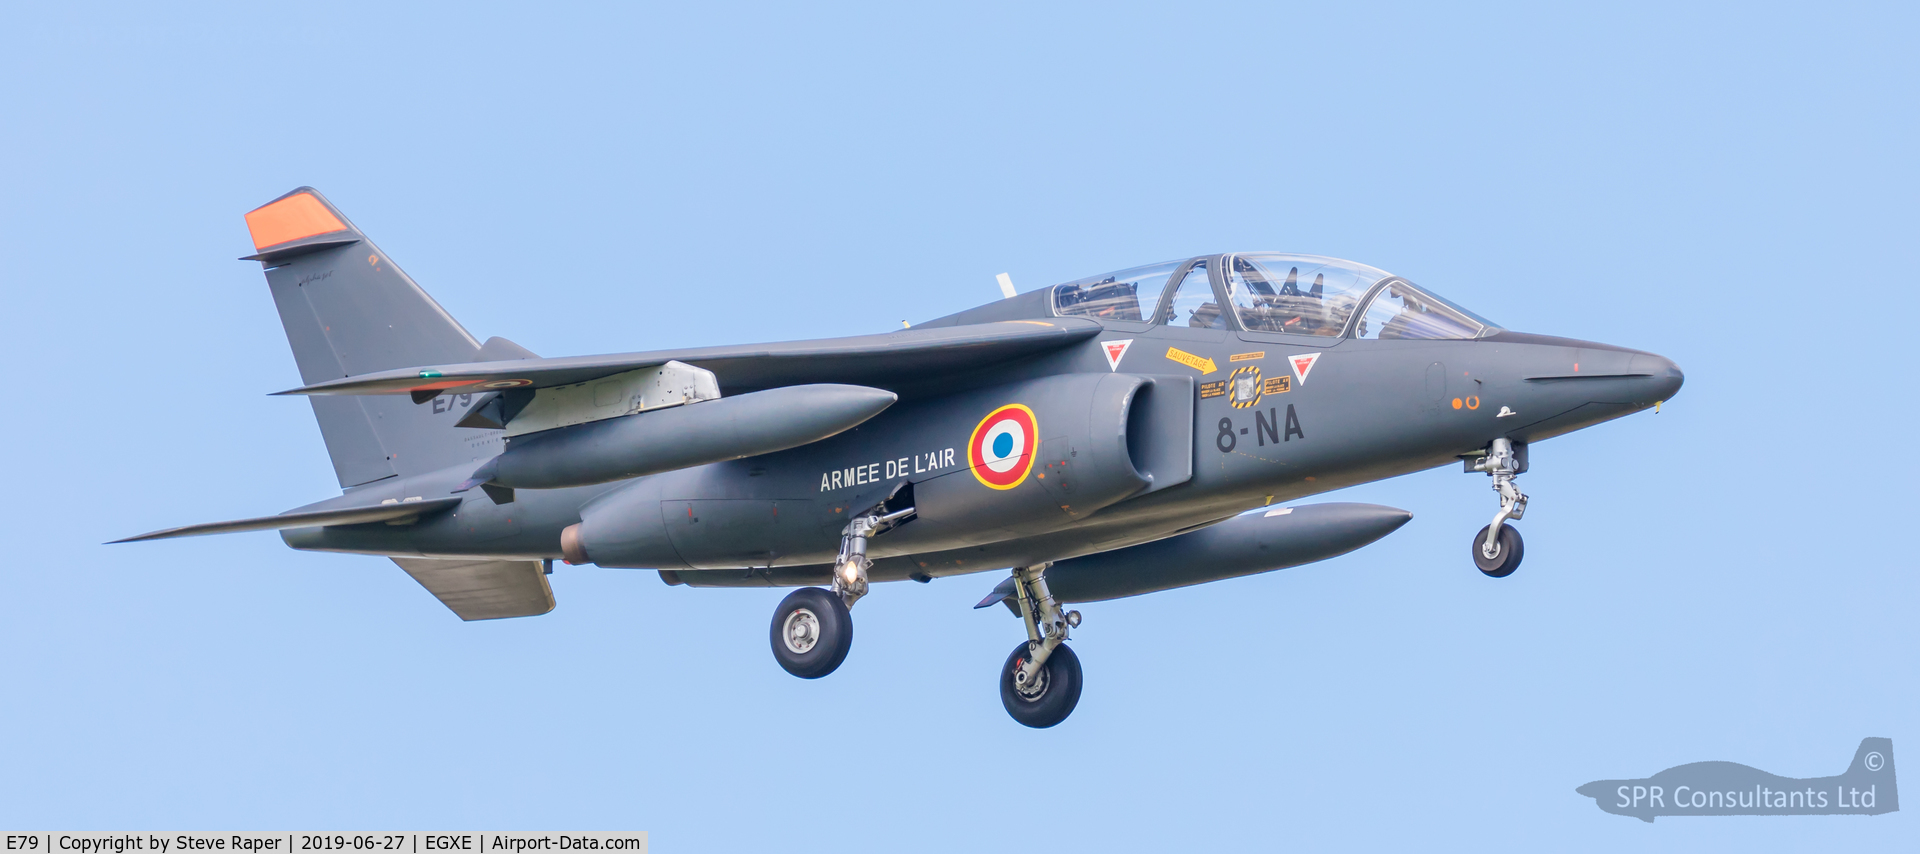 E79, Dassault-Dornier Alpha Jet E C/N E79, Coming in to land, E79 8-NA, prepares to touchdown at RAF Leeming